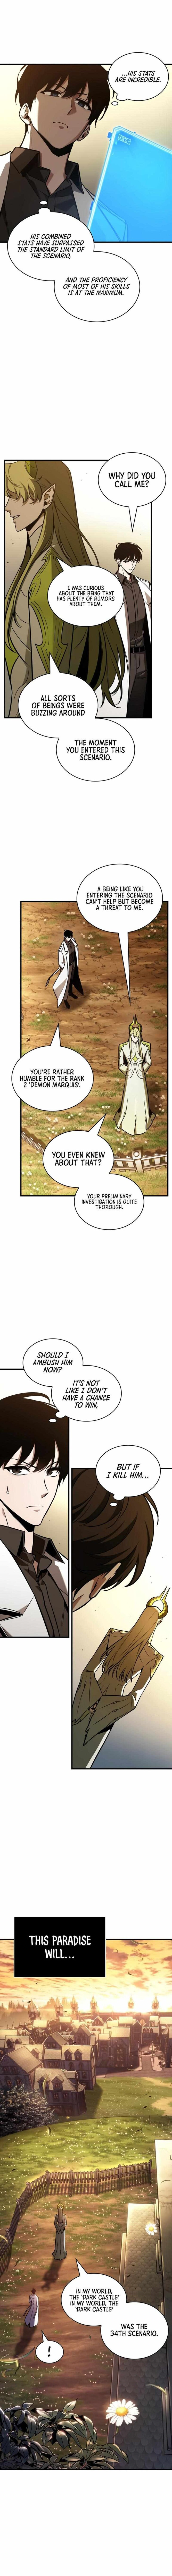 Omniscient Reader's View Manga Manga Chapter - 182 - image 4